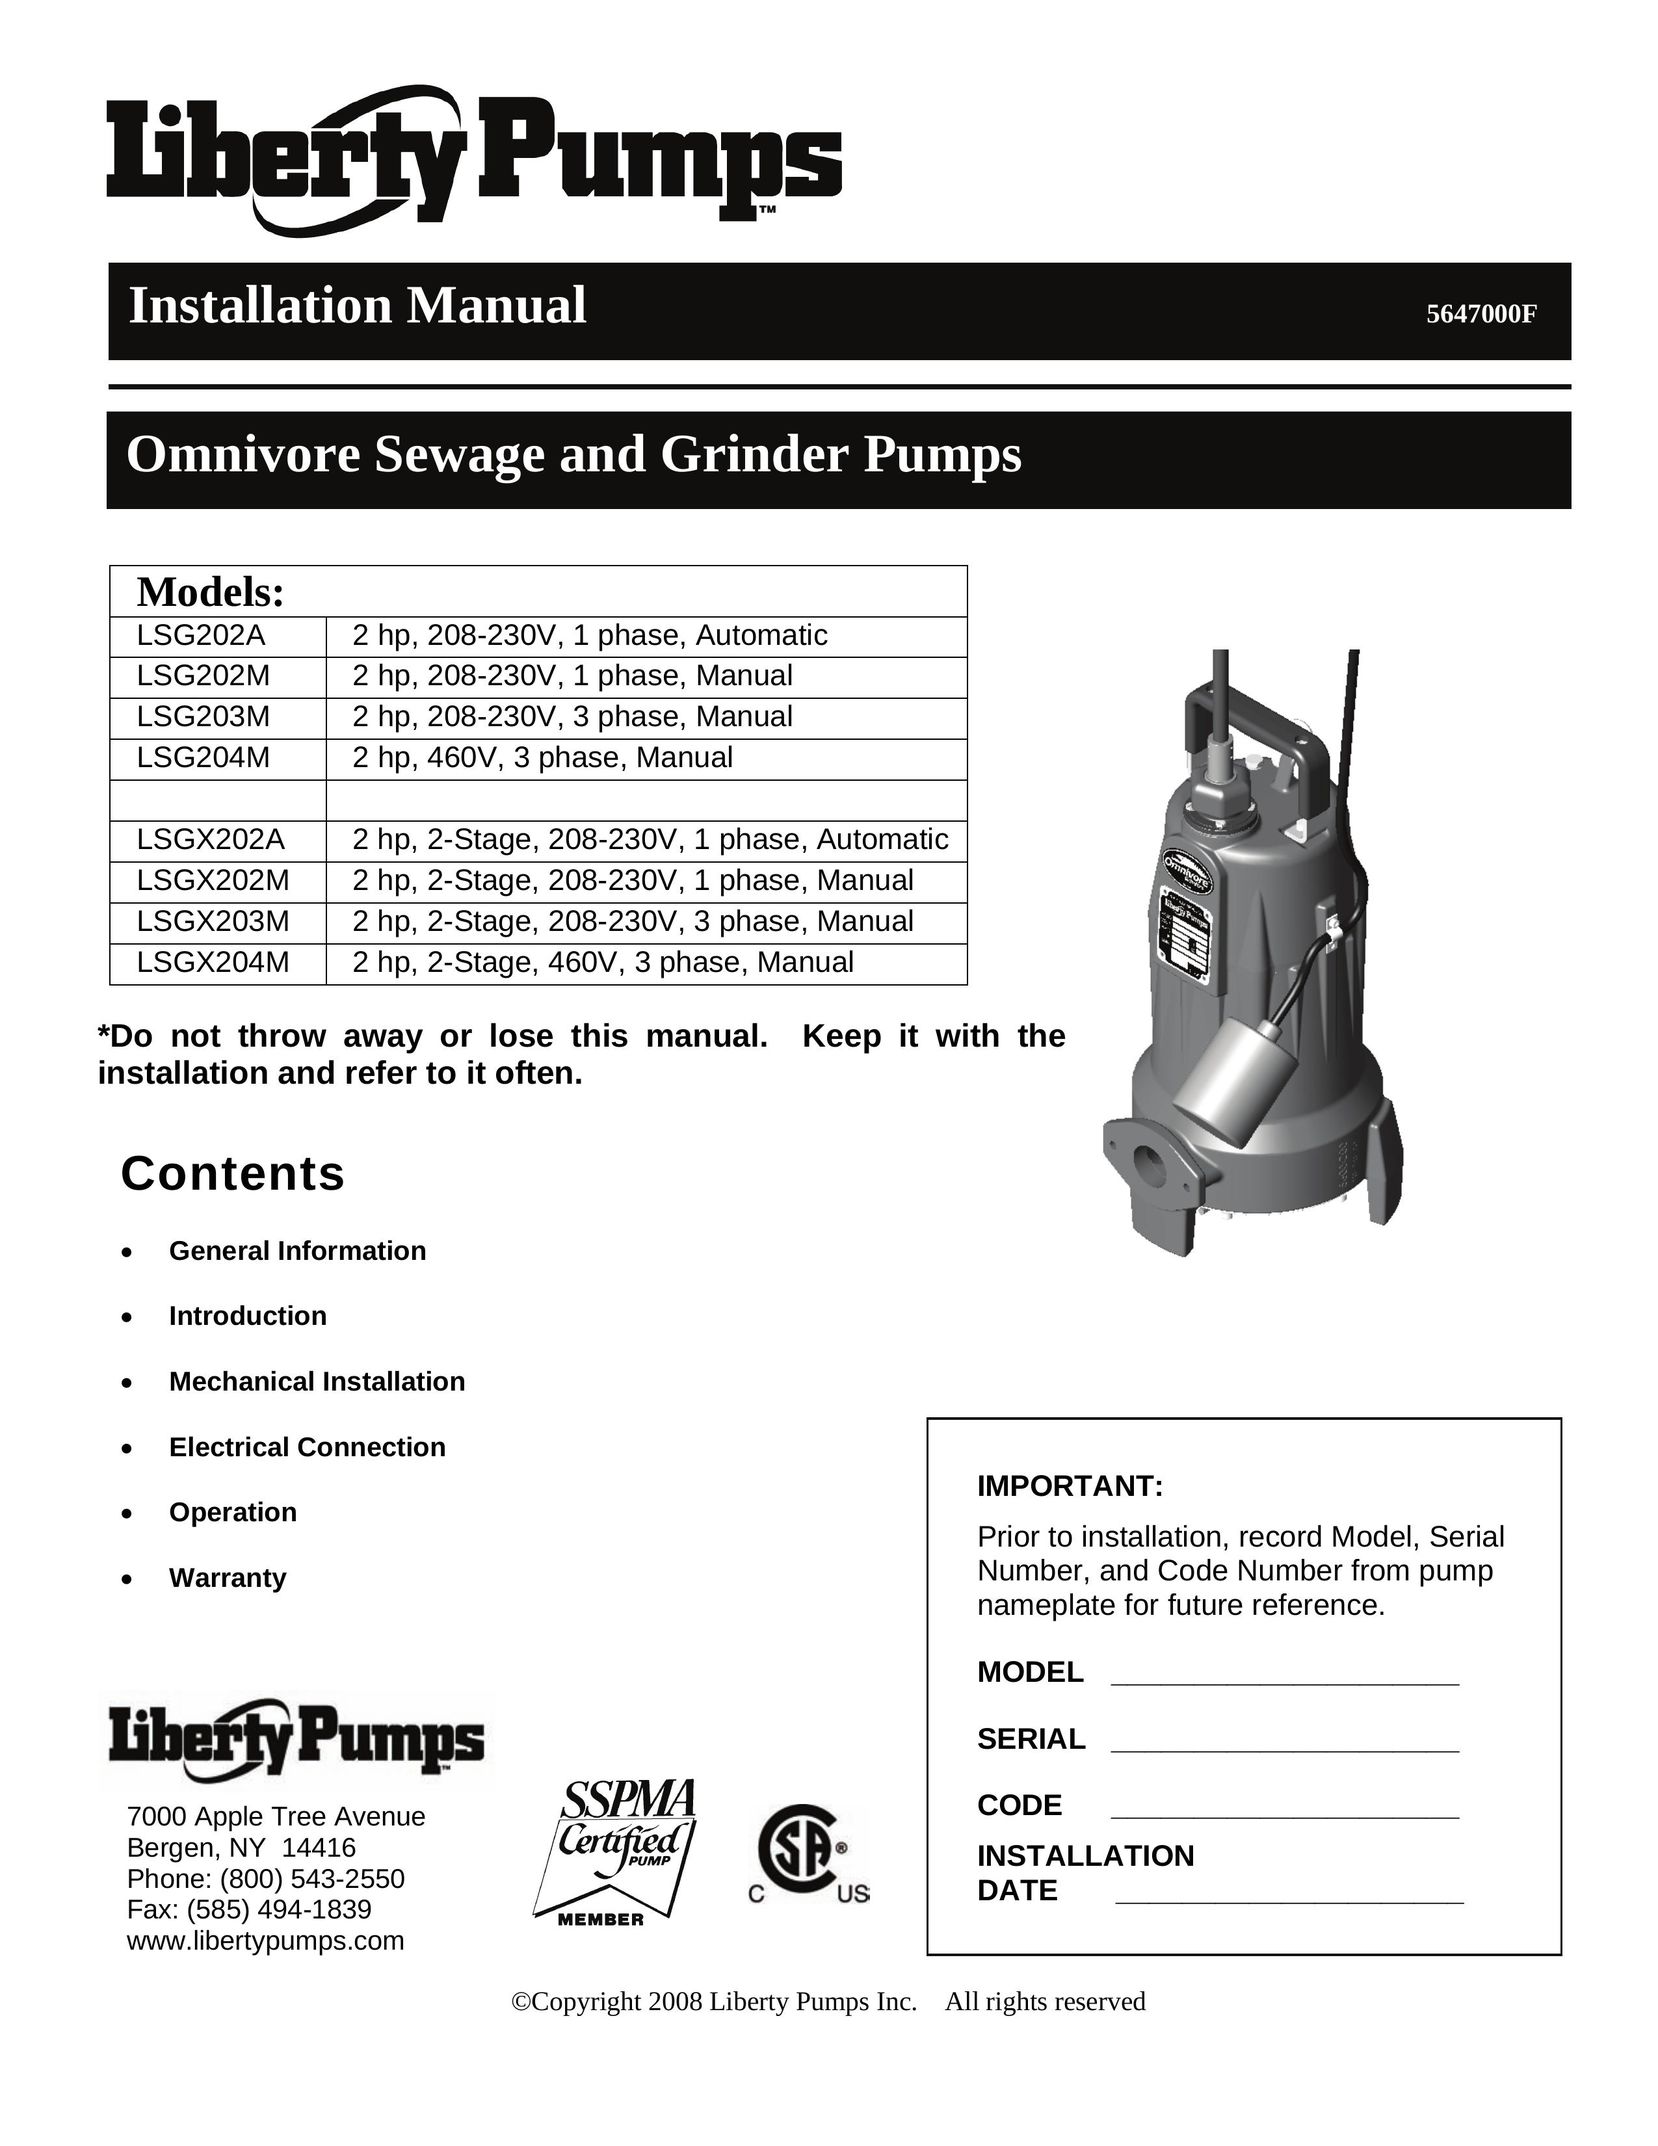 HP (Hewlett-Packard) LSGX202M Grinder User Manual